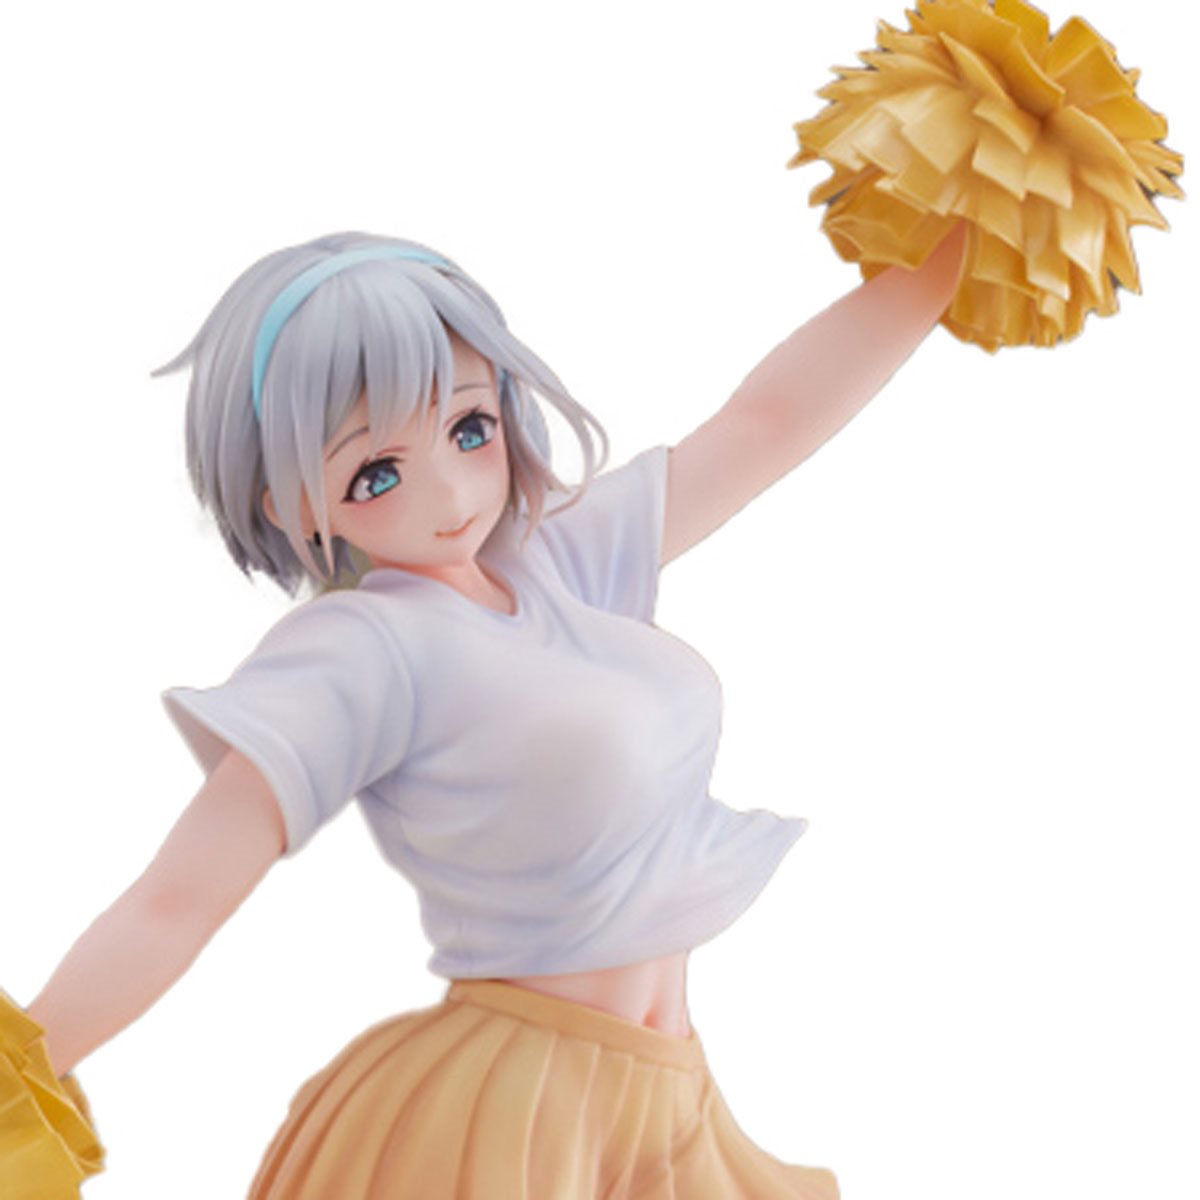 Anime/Manga - Cheerleader Riku 1/6th Scale Figure Hobby Sakura Illustration by Josun